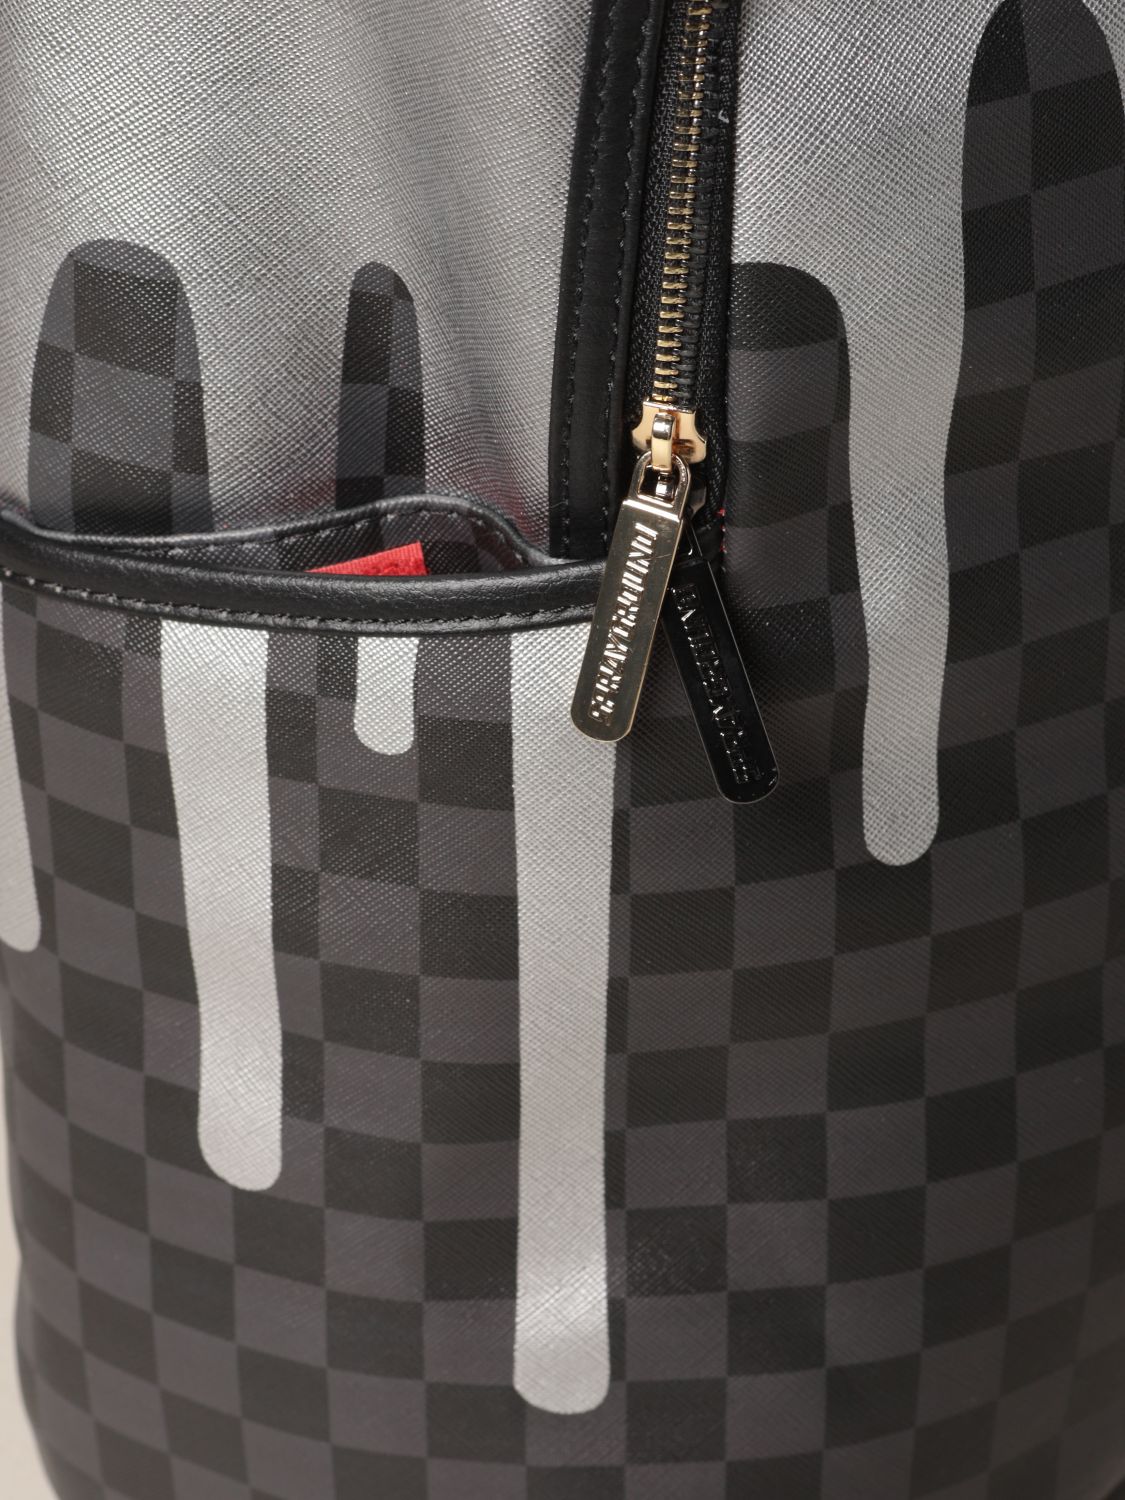 SPRAYGROUND: duble drips print backpack in printed vegan leather - Brown